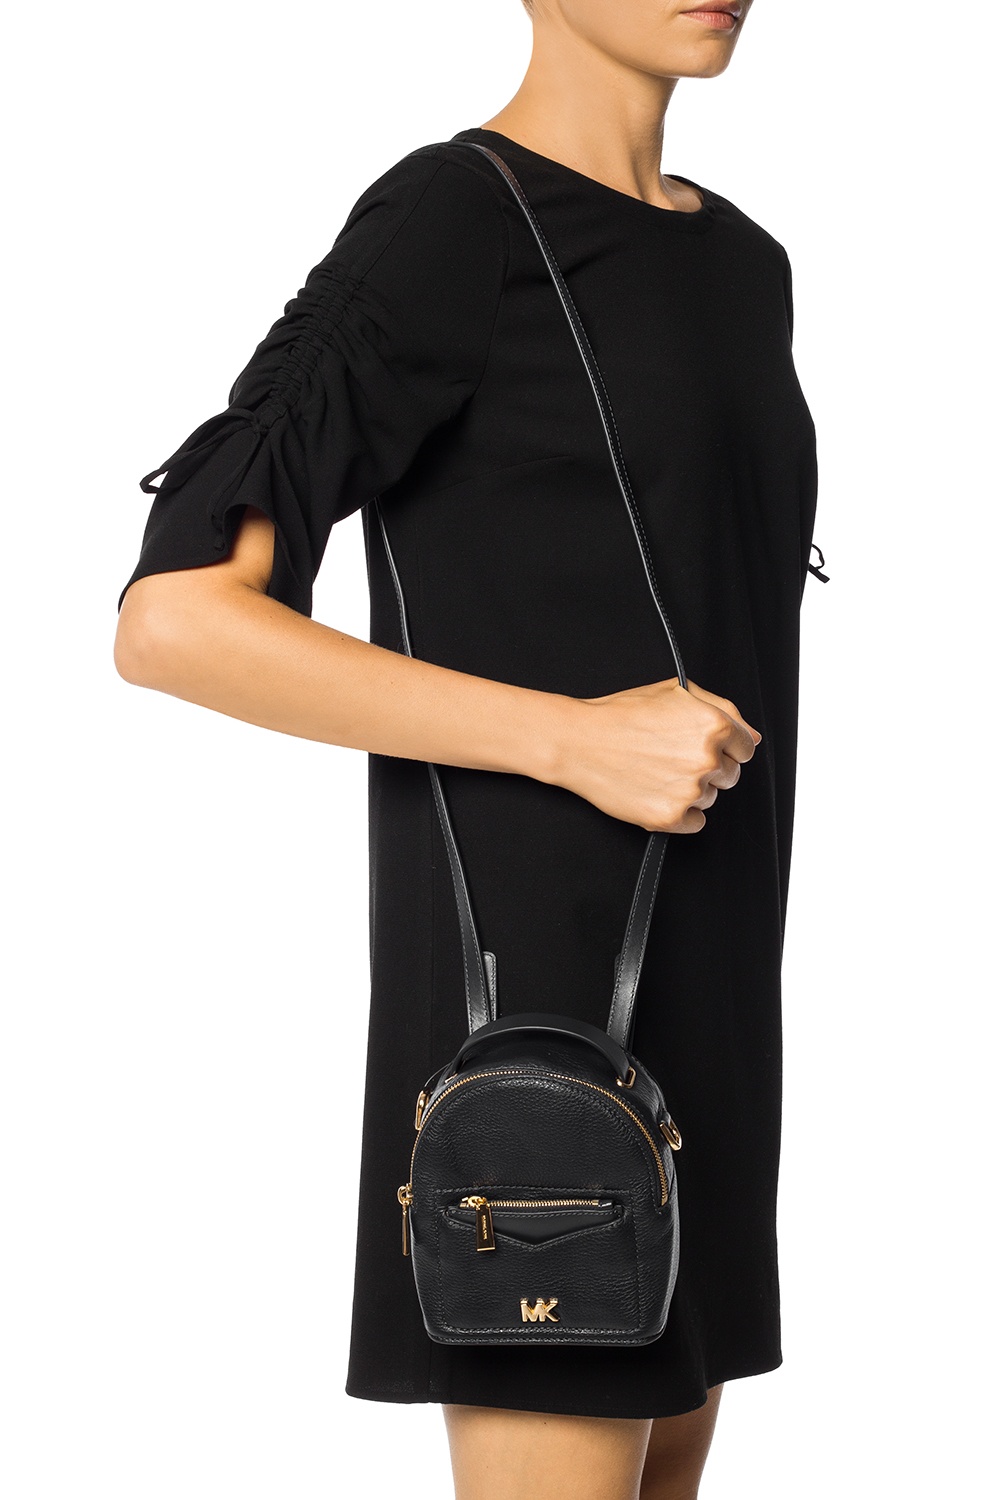 Michael Kors Jessa backpack